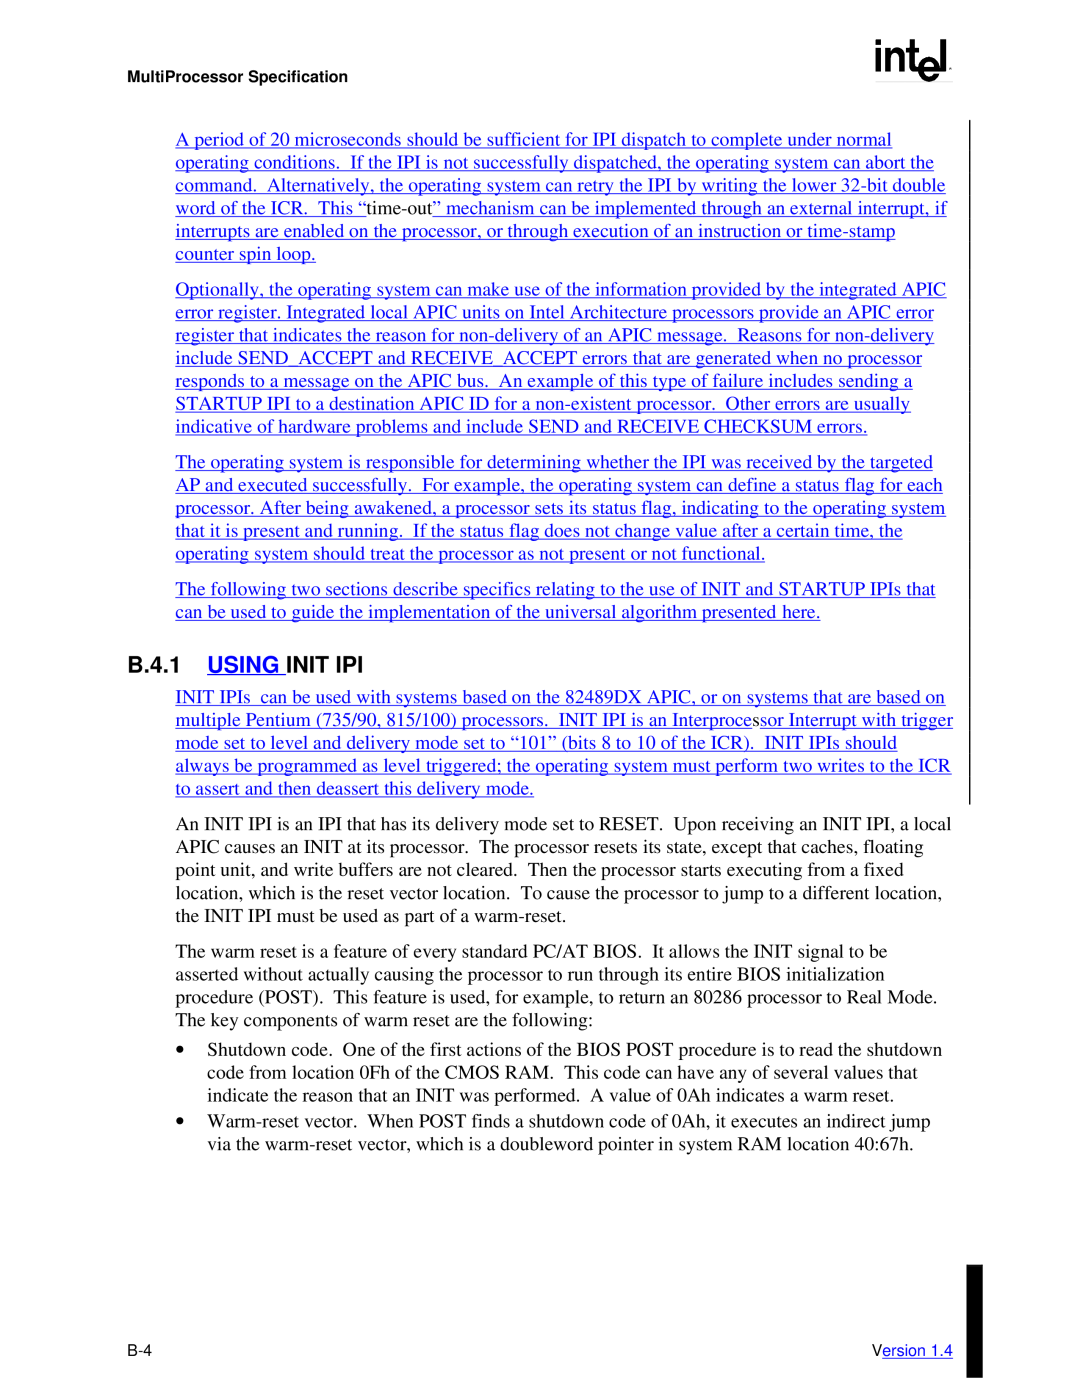 Intel MultiProcessor manual B.4.1 USINGINIT IPI 